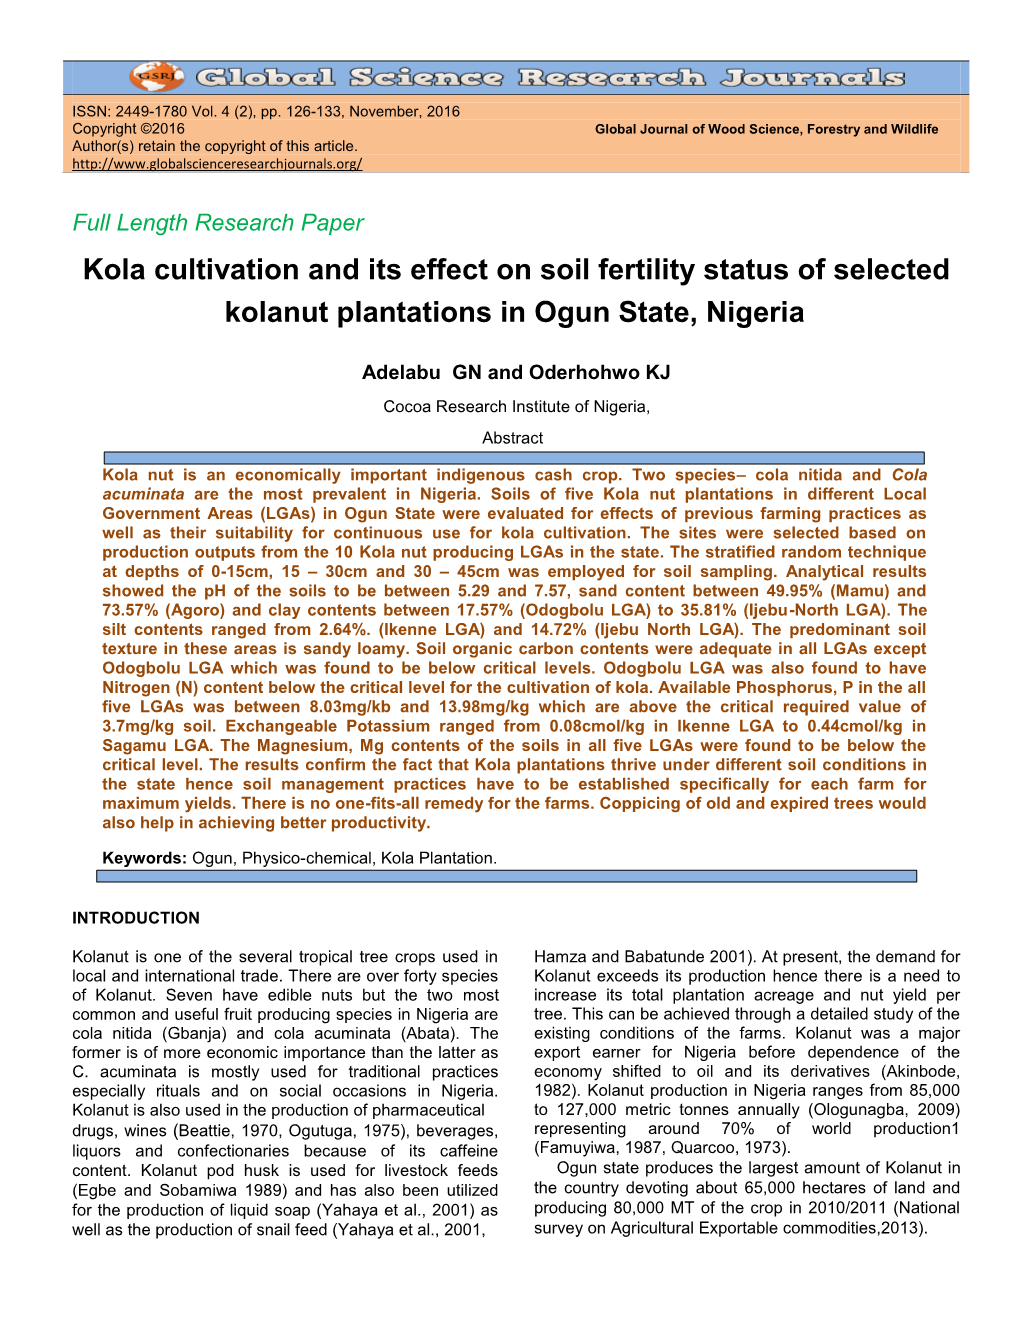 Kola Cultivation and Its Effect on Soil Fertility Status of Selected Kolanut Plantations in Ogun State, Nigeria